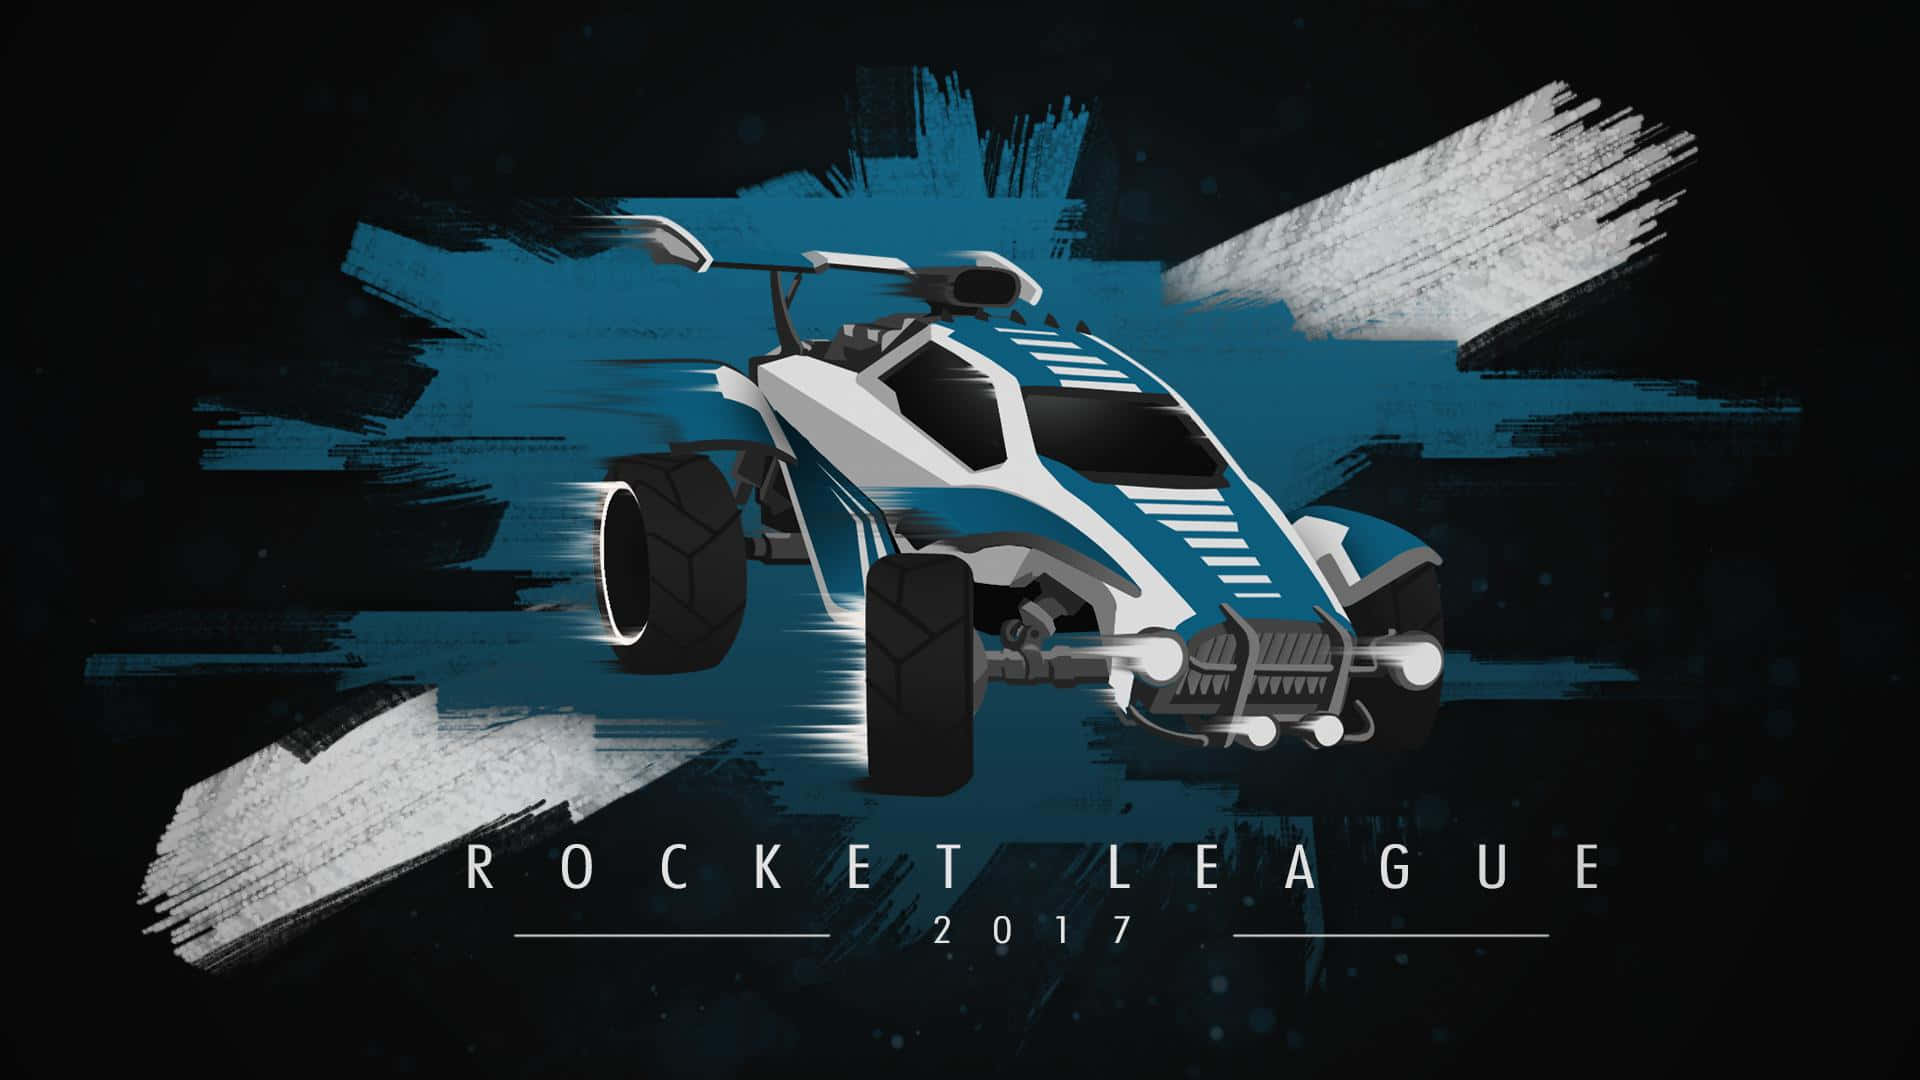 Let the Best Rocket League games Begin!